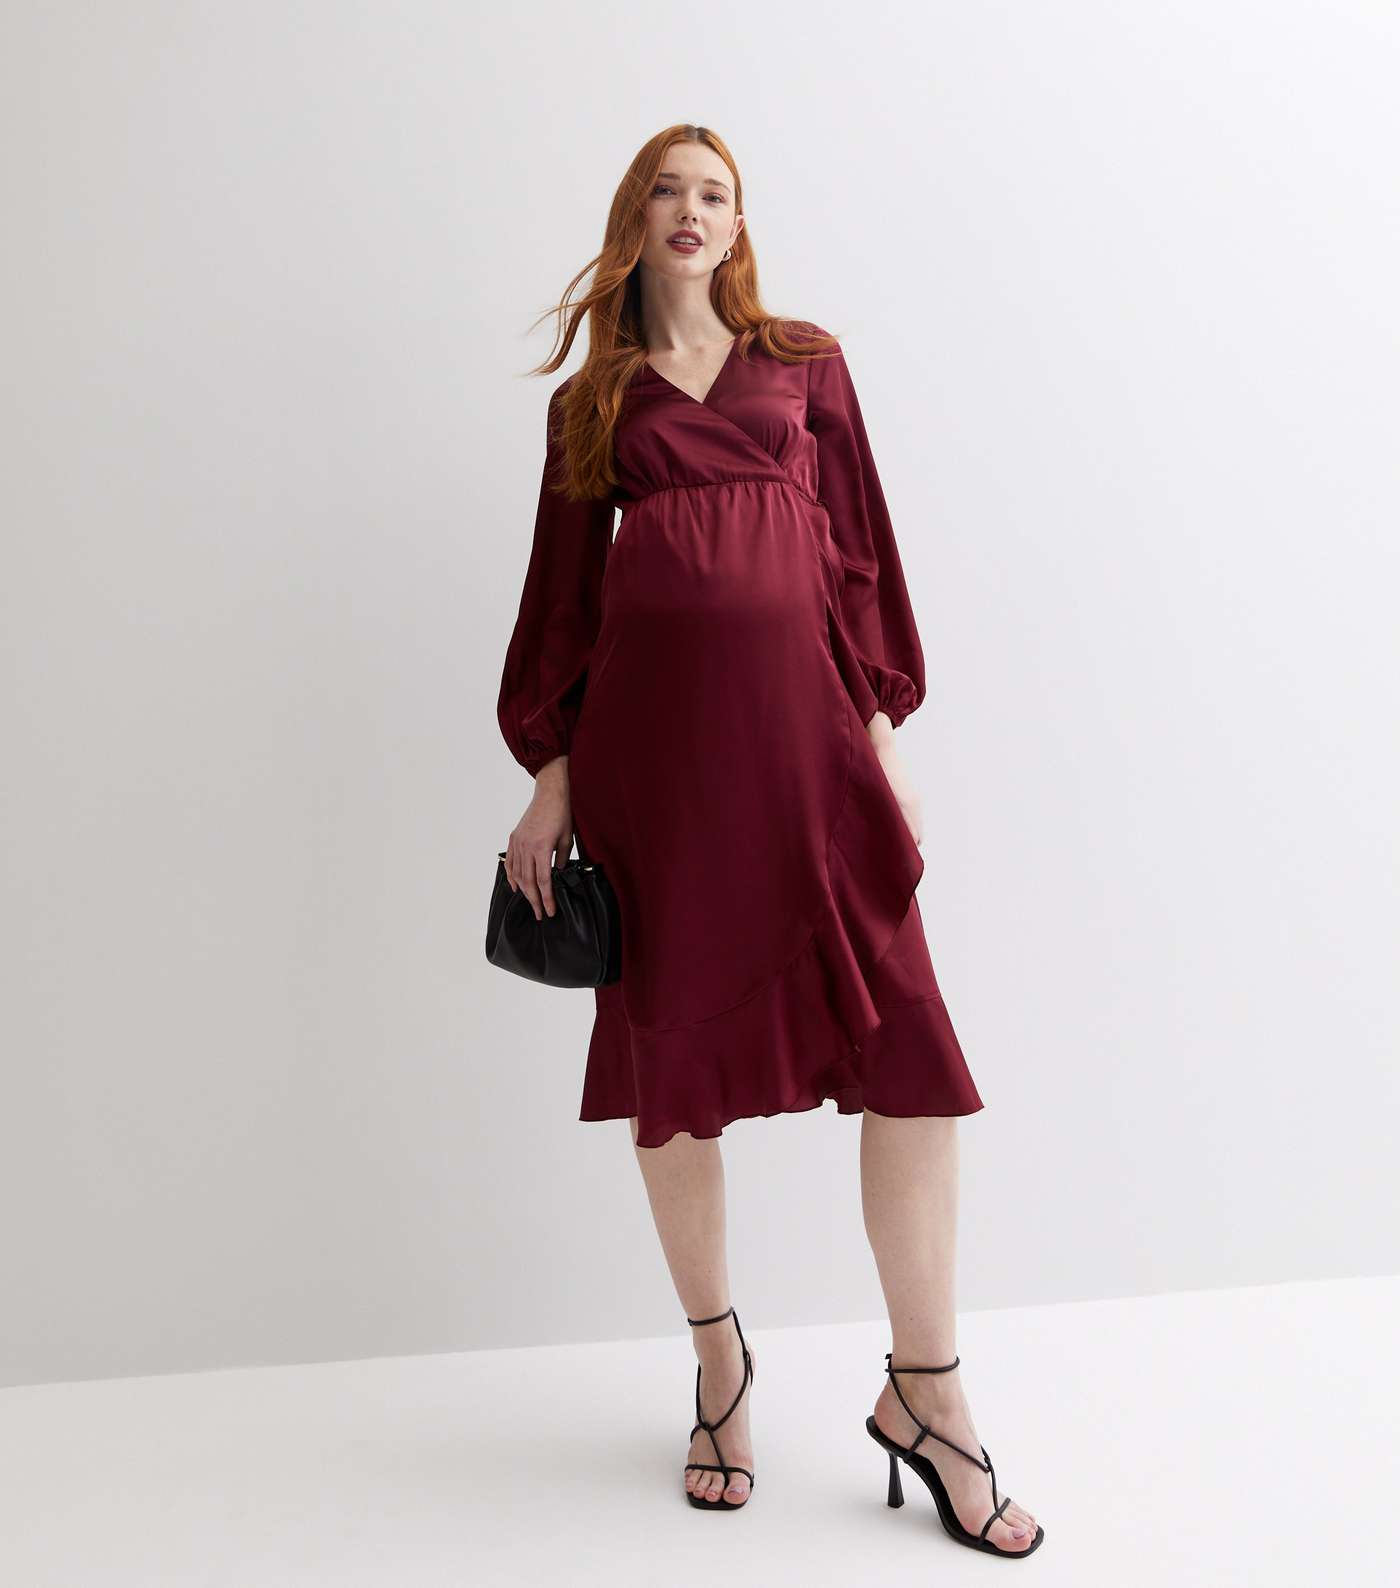 Maternity Burgundy Satin Midi Wrap Dress